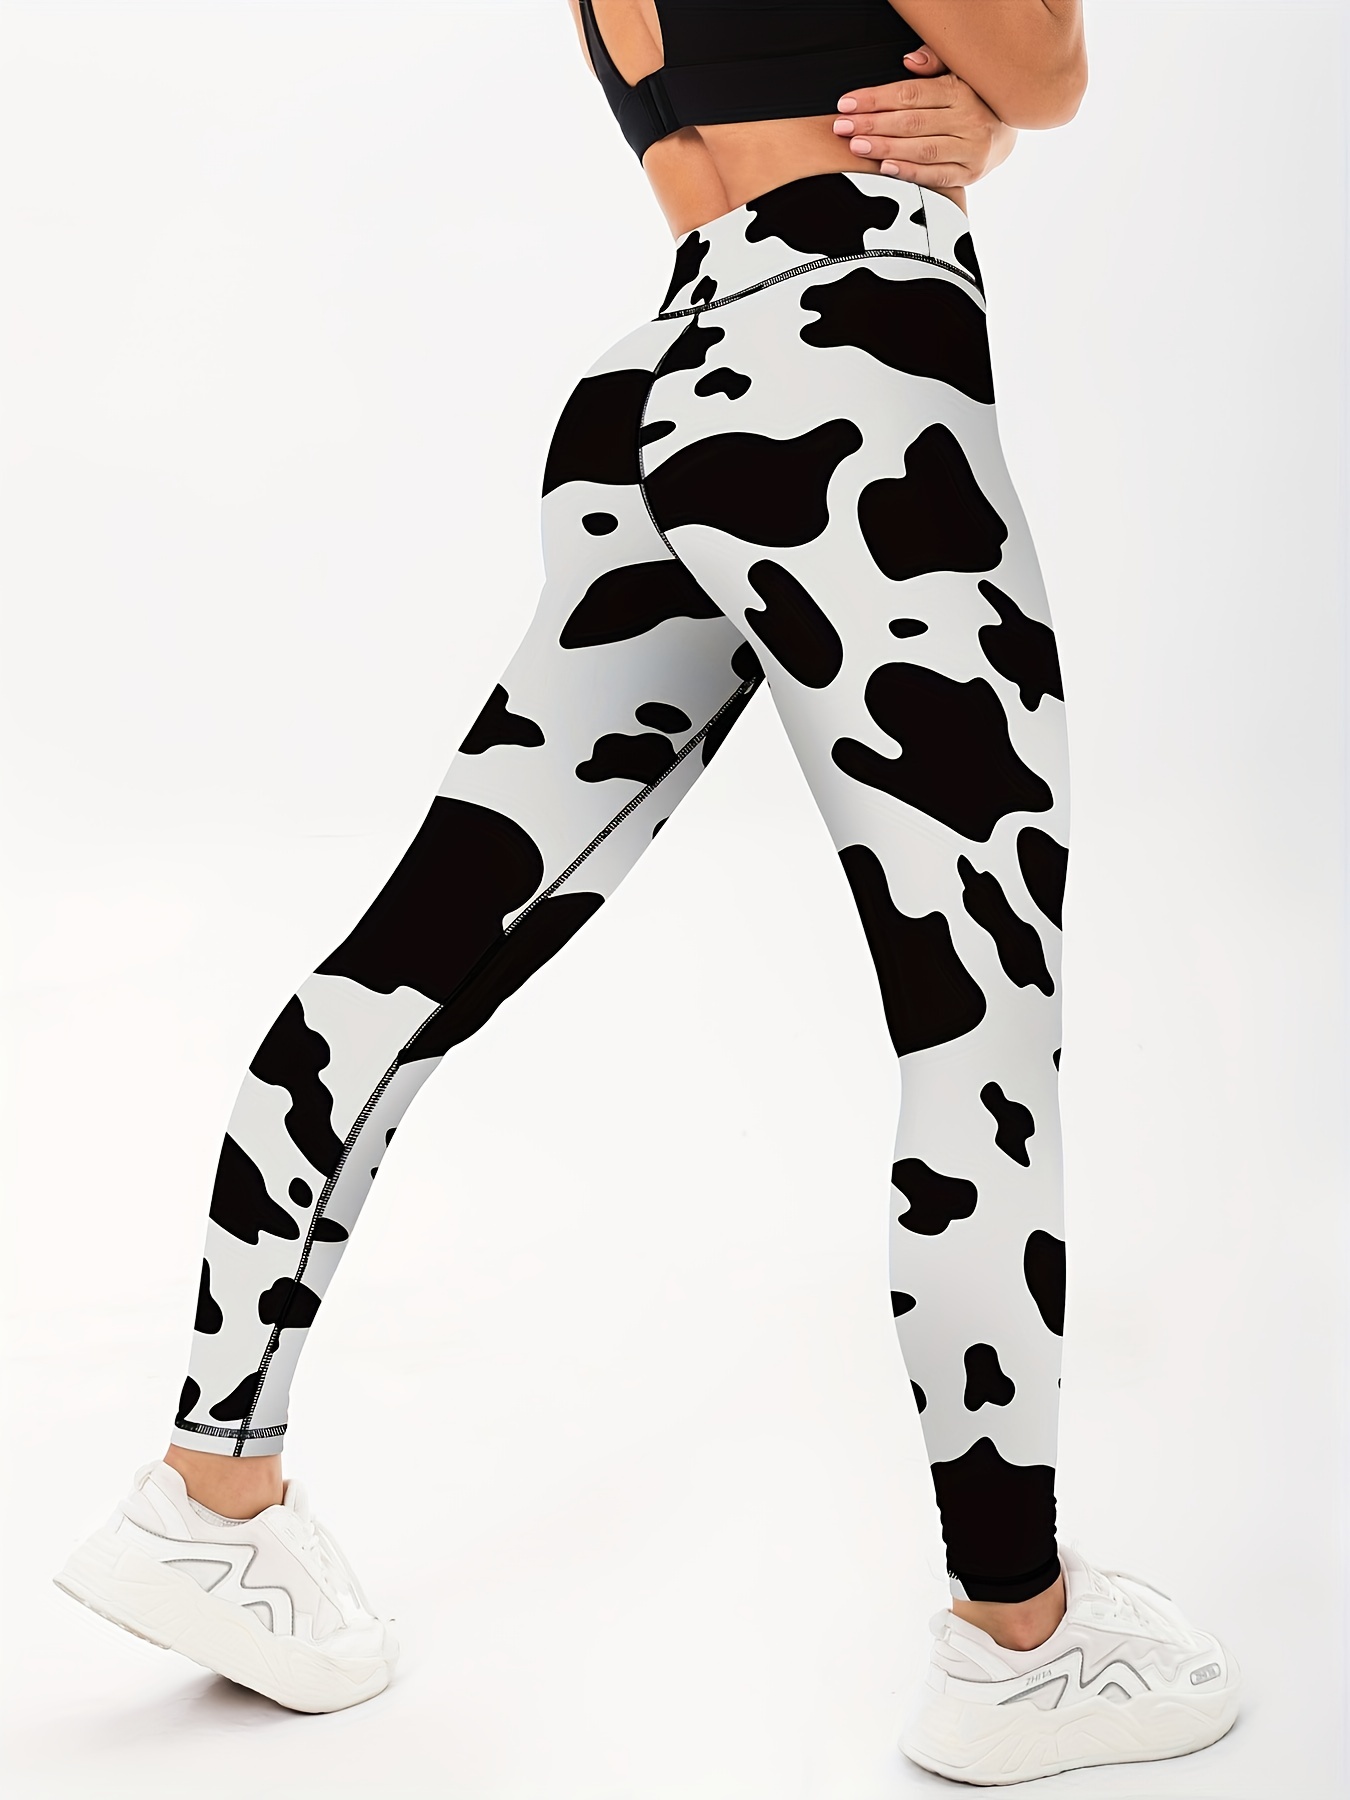 Leggings Cow Leggingsstockings Pants Workout Yoga Printed